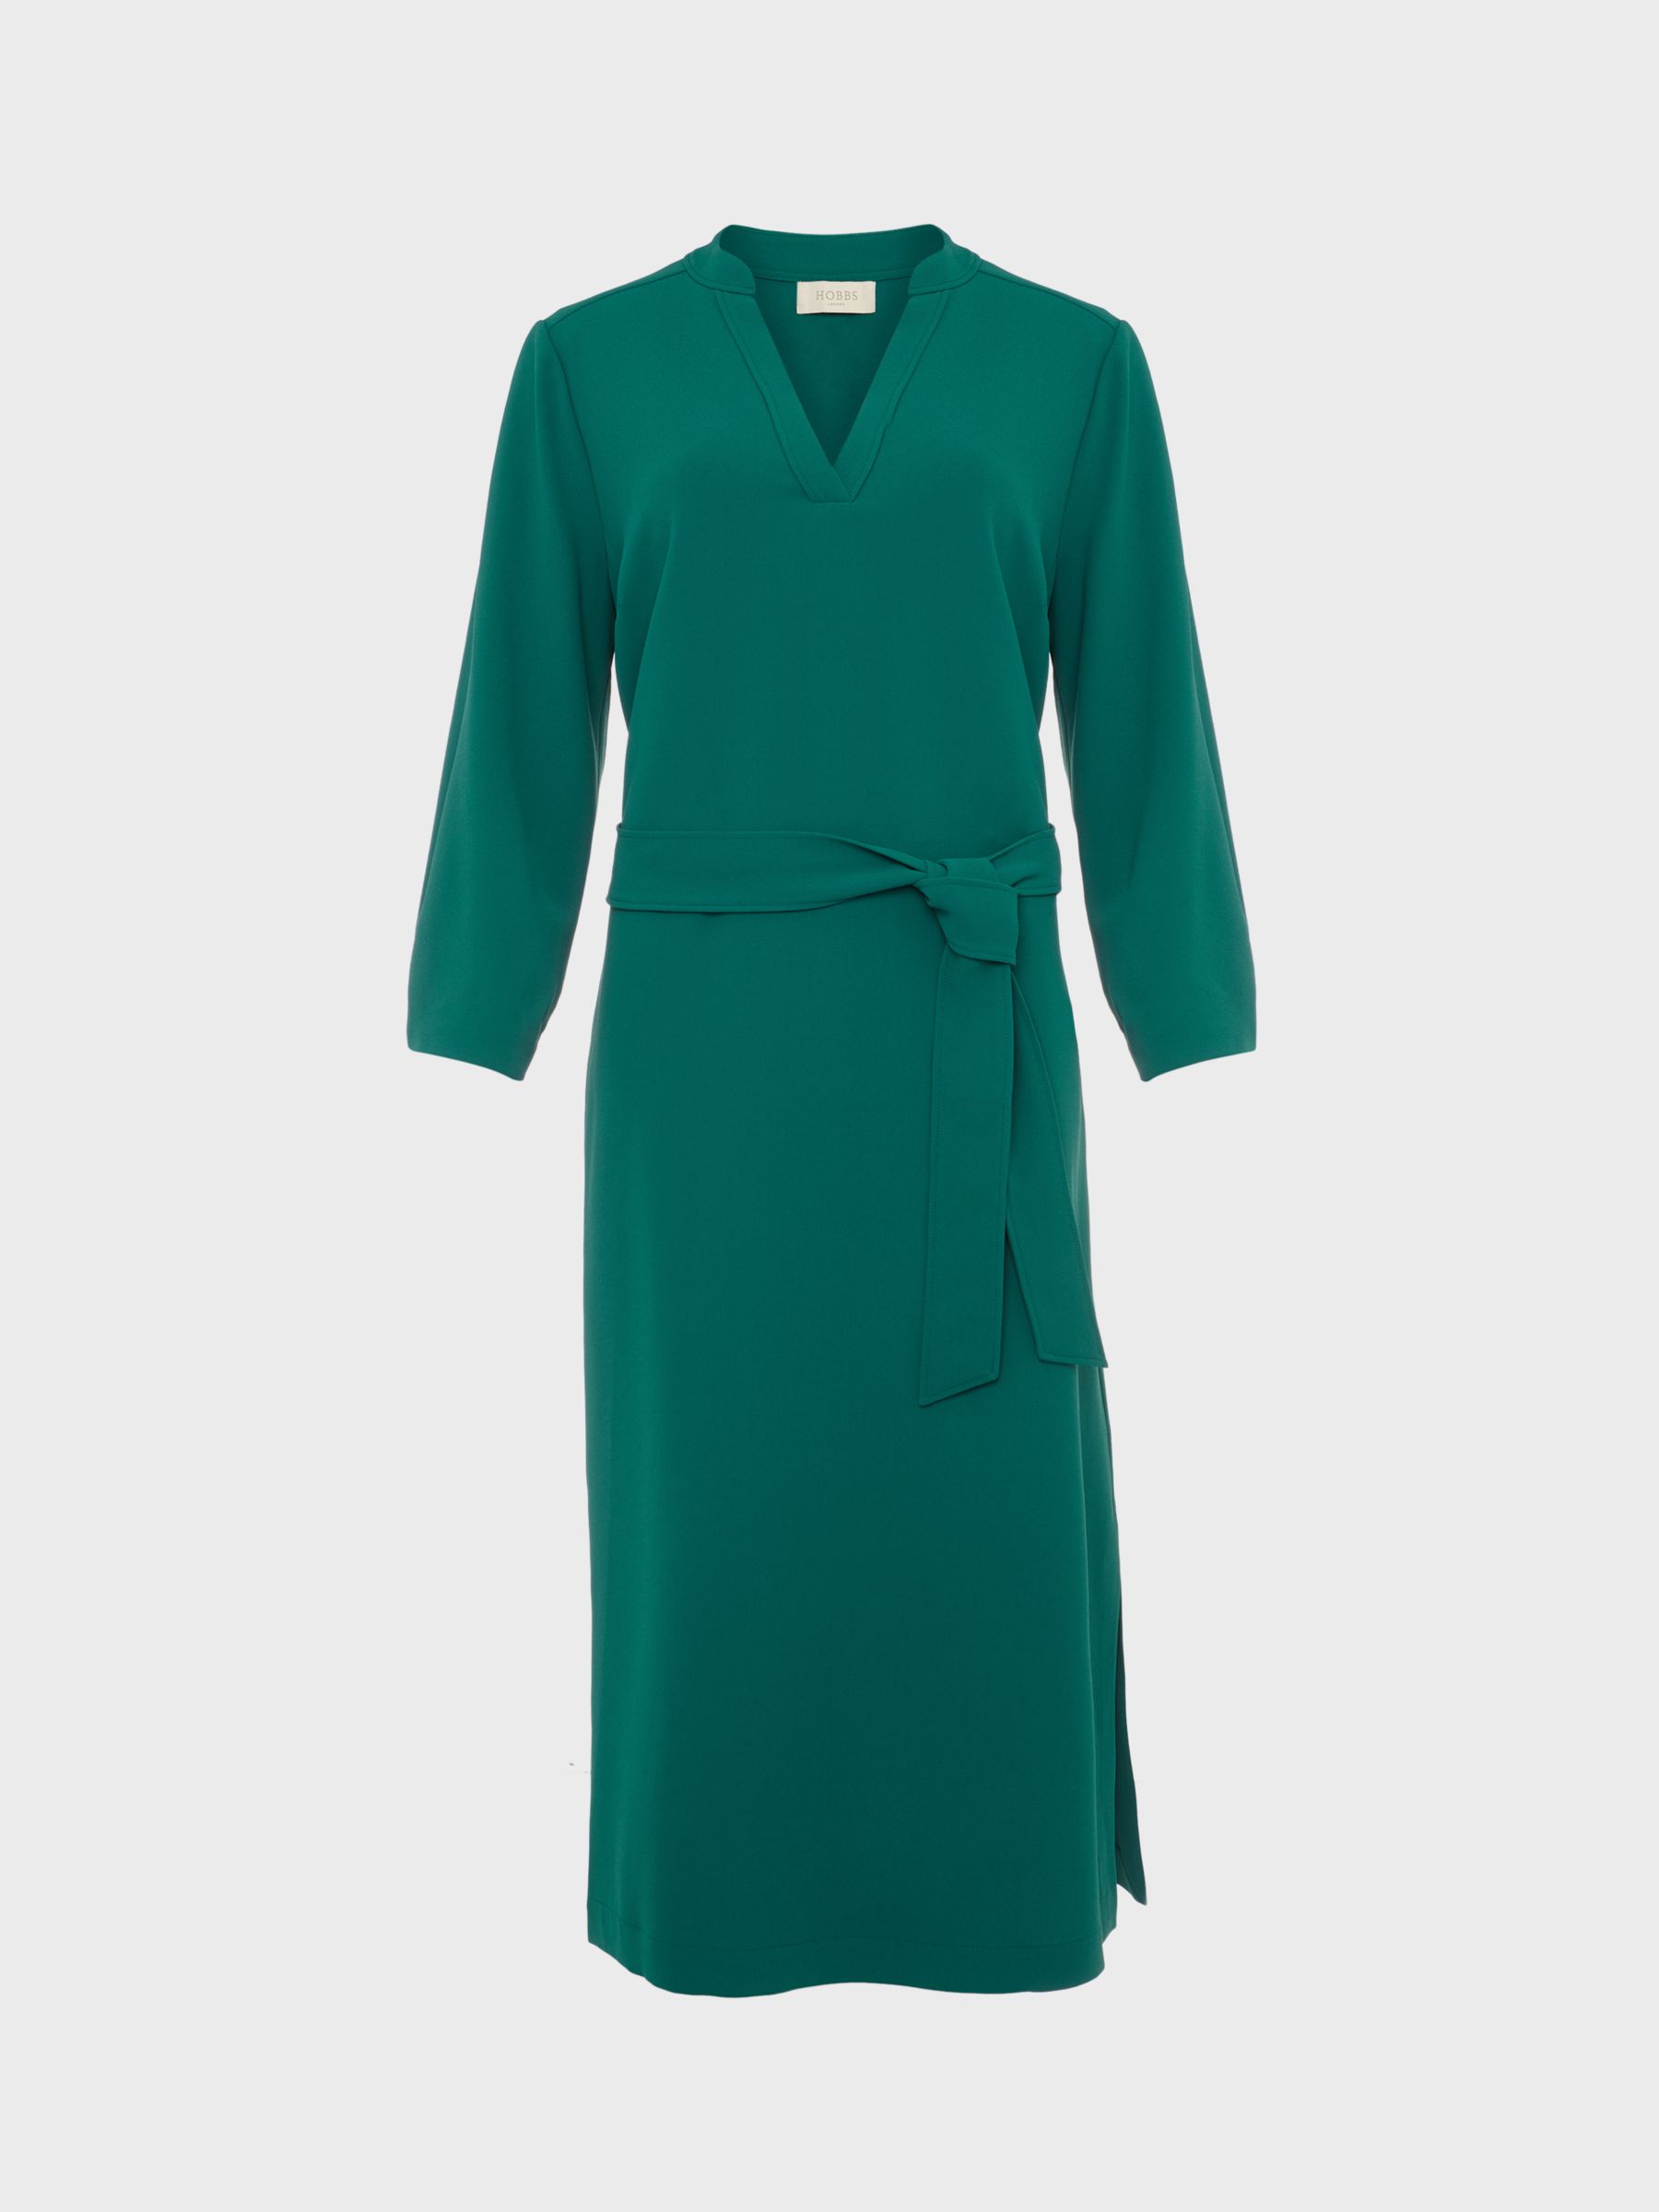 Hobbs Kirsty Belted Midi Dress, Jade Green at John Lewis & Partners